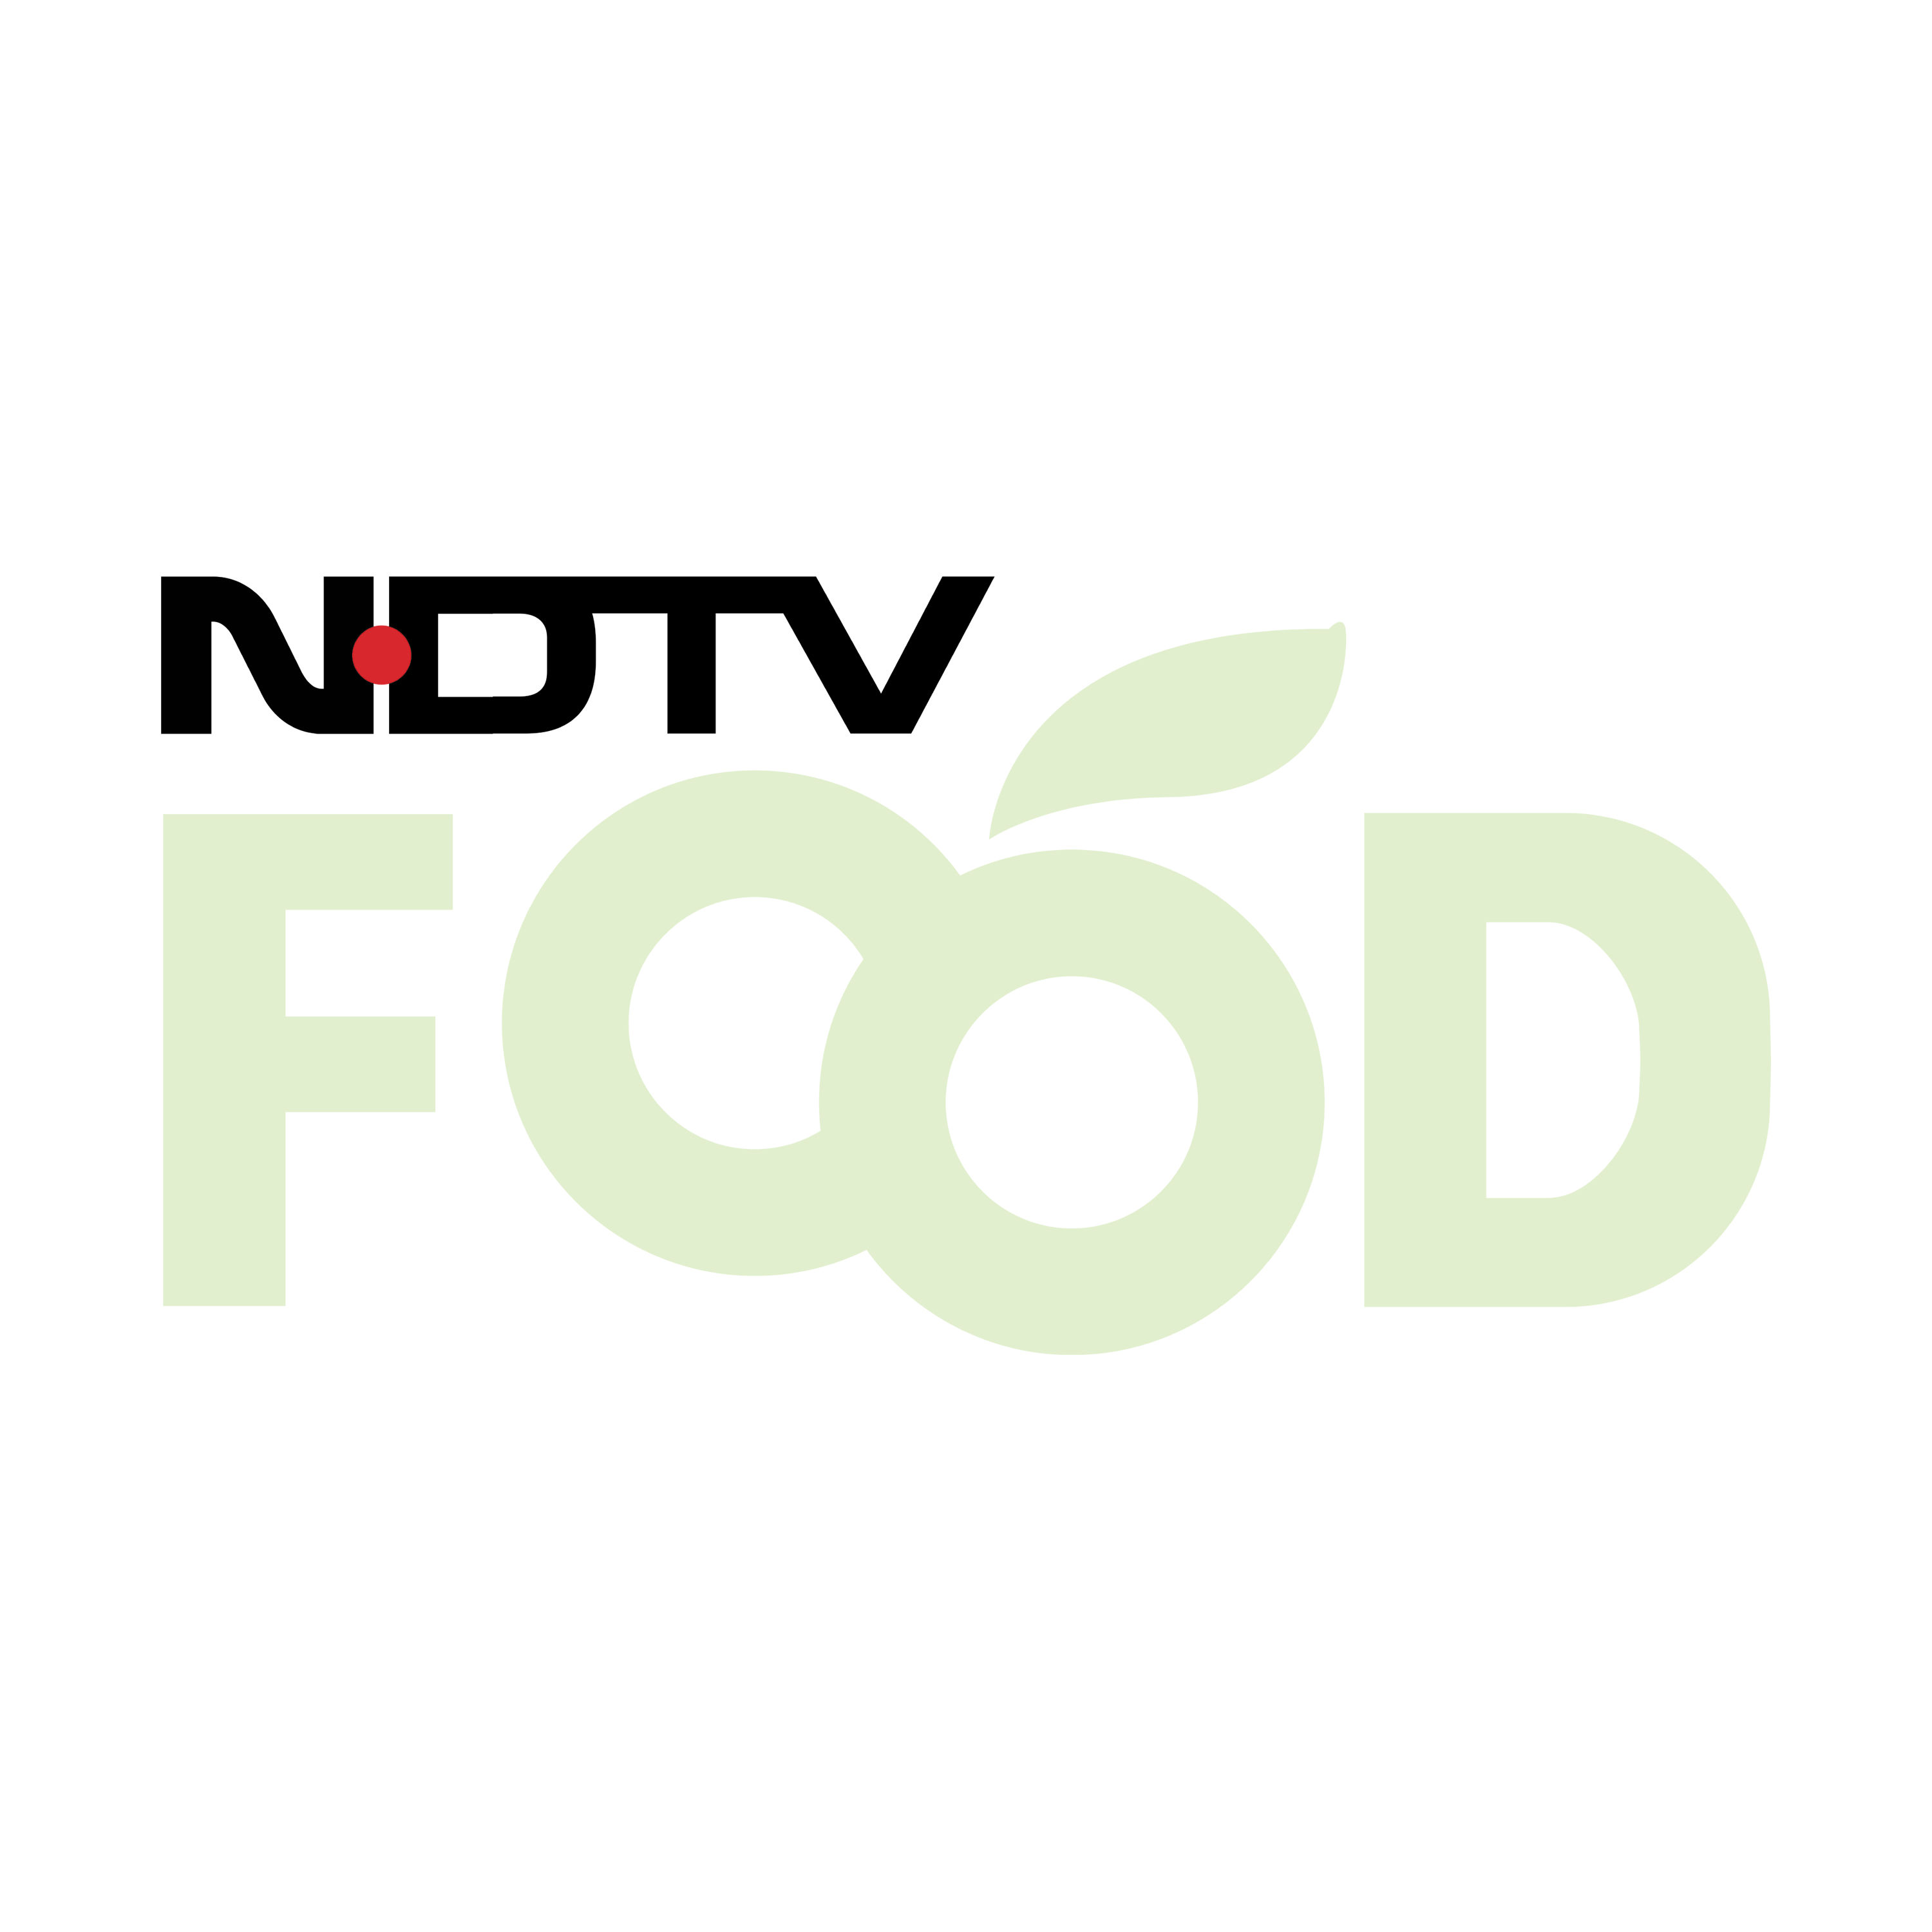 NDTV Food Logo Transparent Clipart